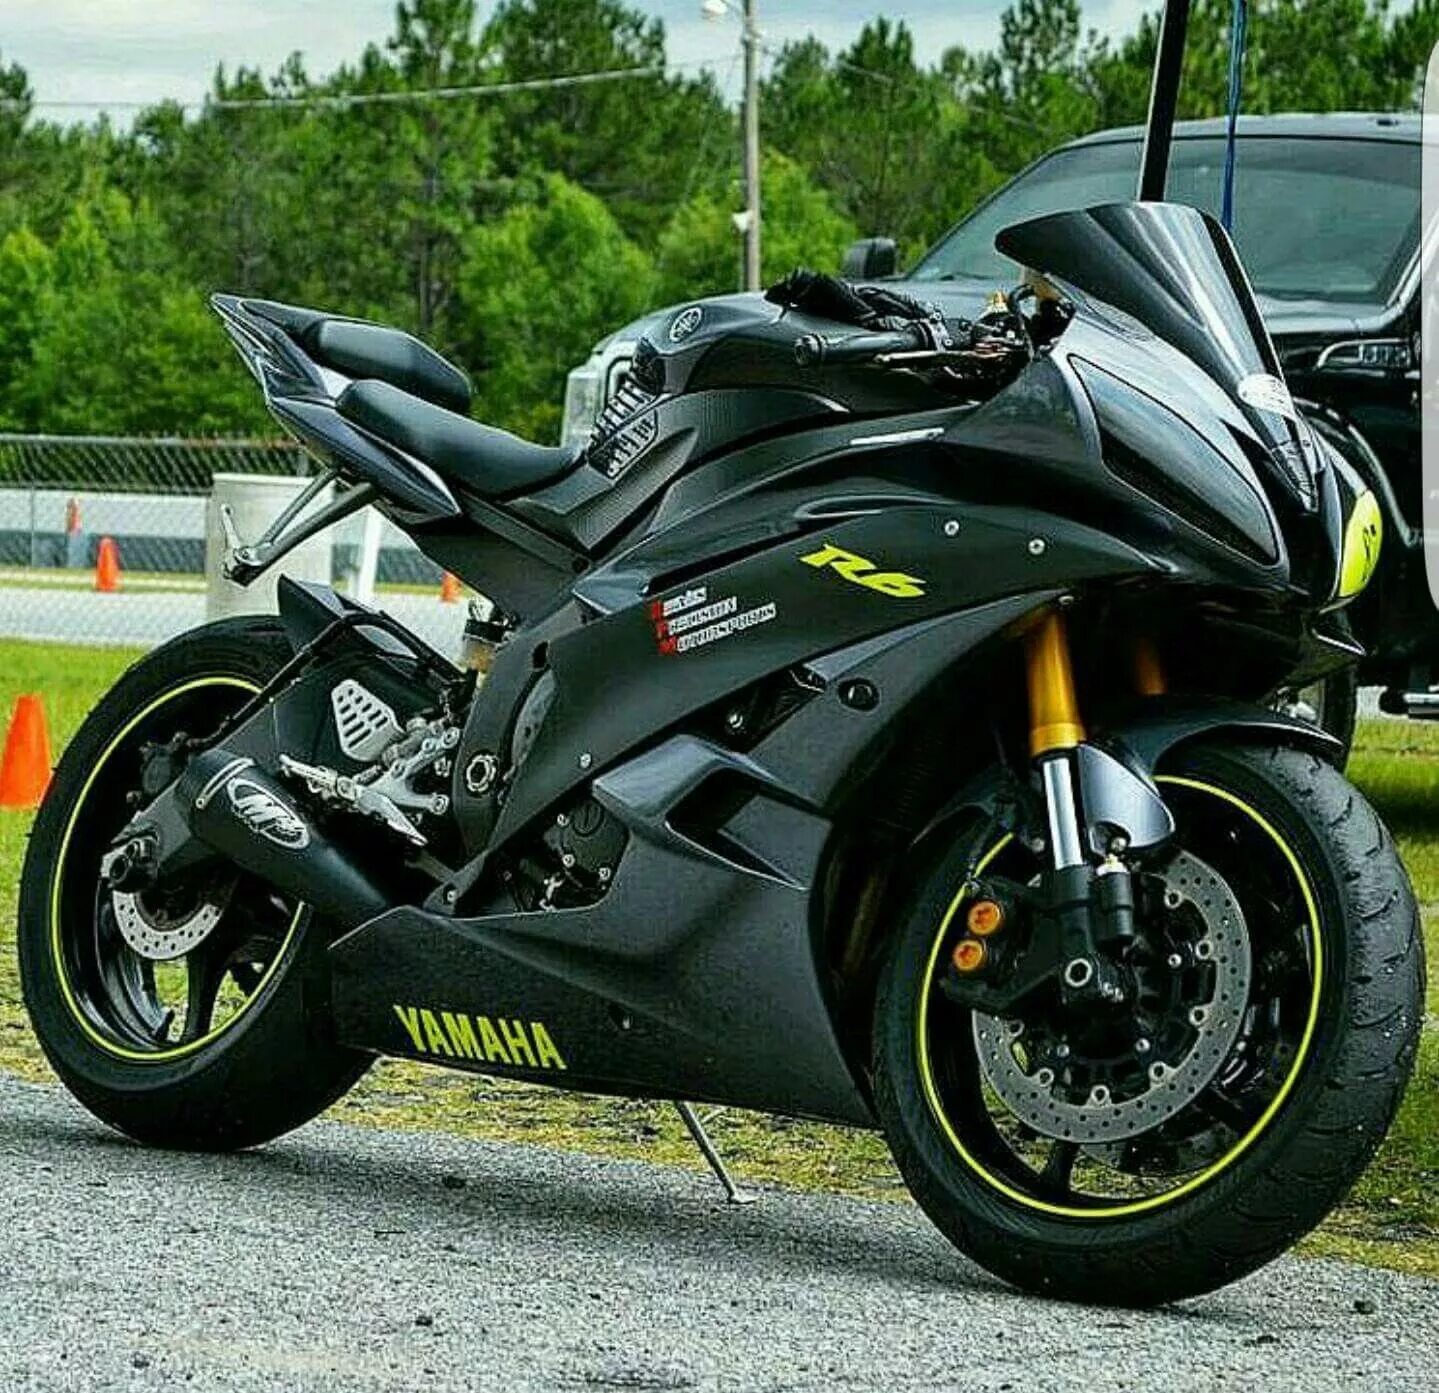 Байк цена в россии. Спортбайк Ямаха Кавасаки. Мотоцикл Yamaha YZF-r6. Yamaha r6 Ducati. BMW r6 Sportbike.